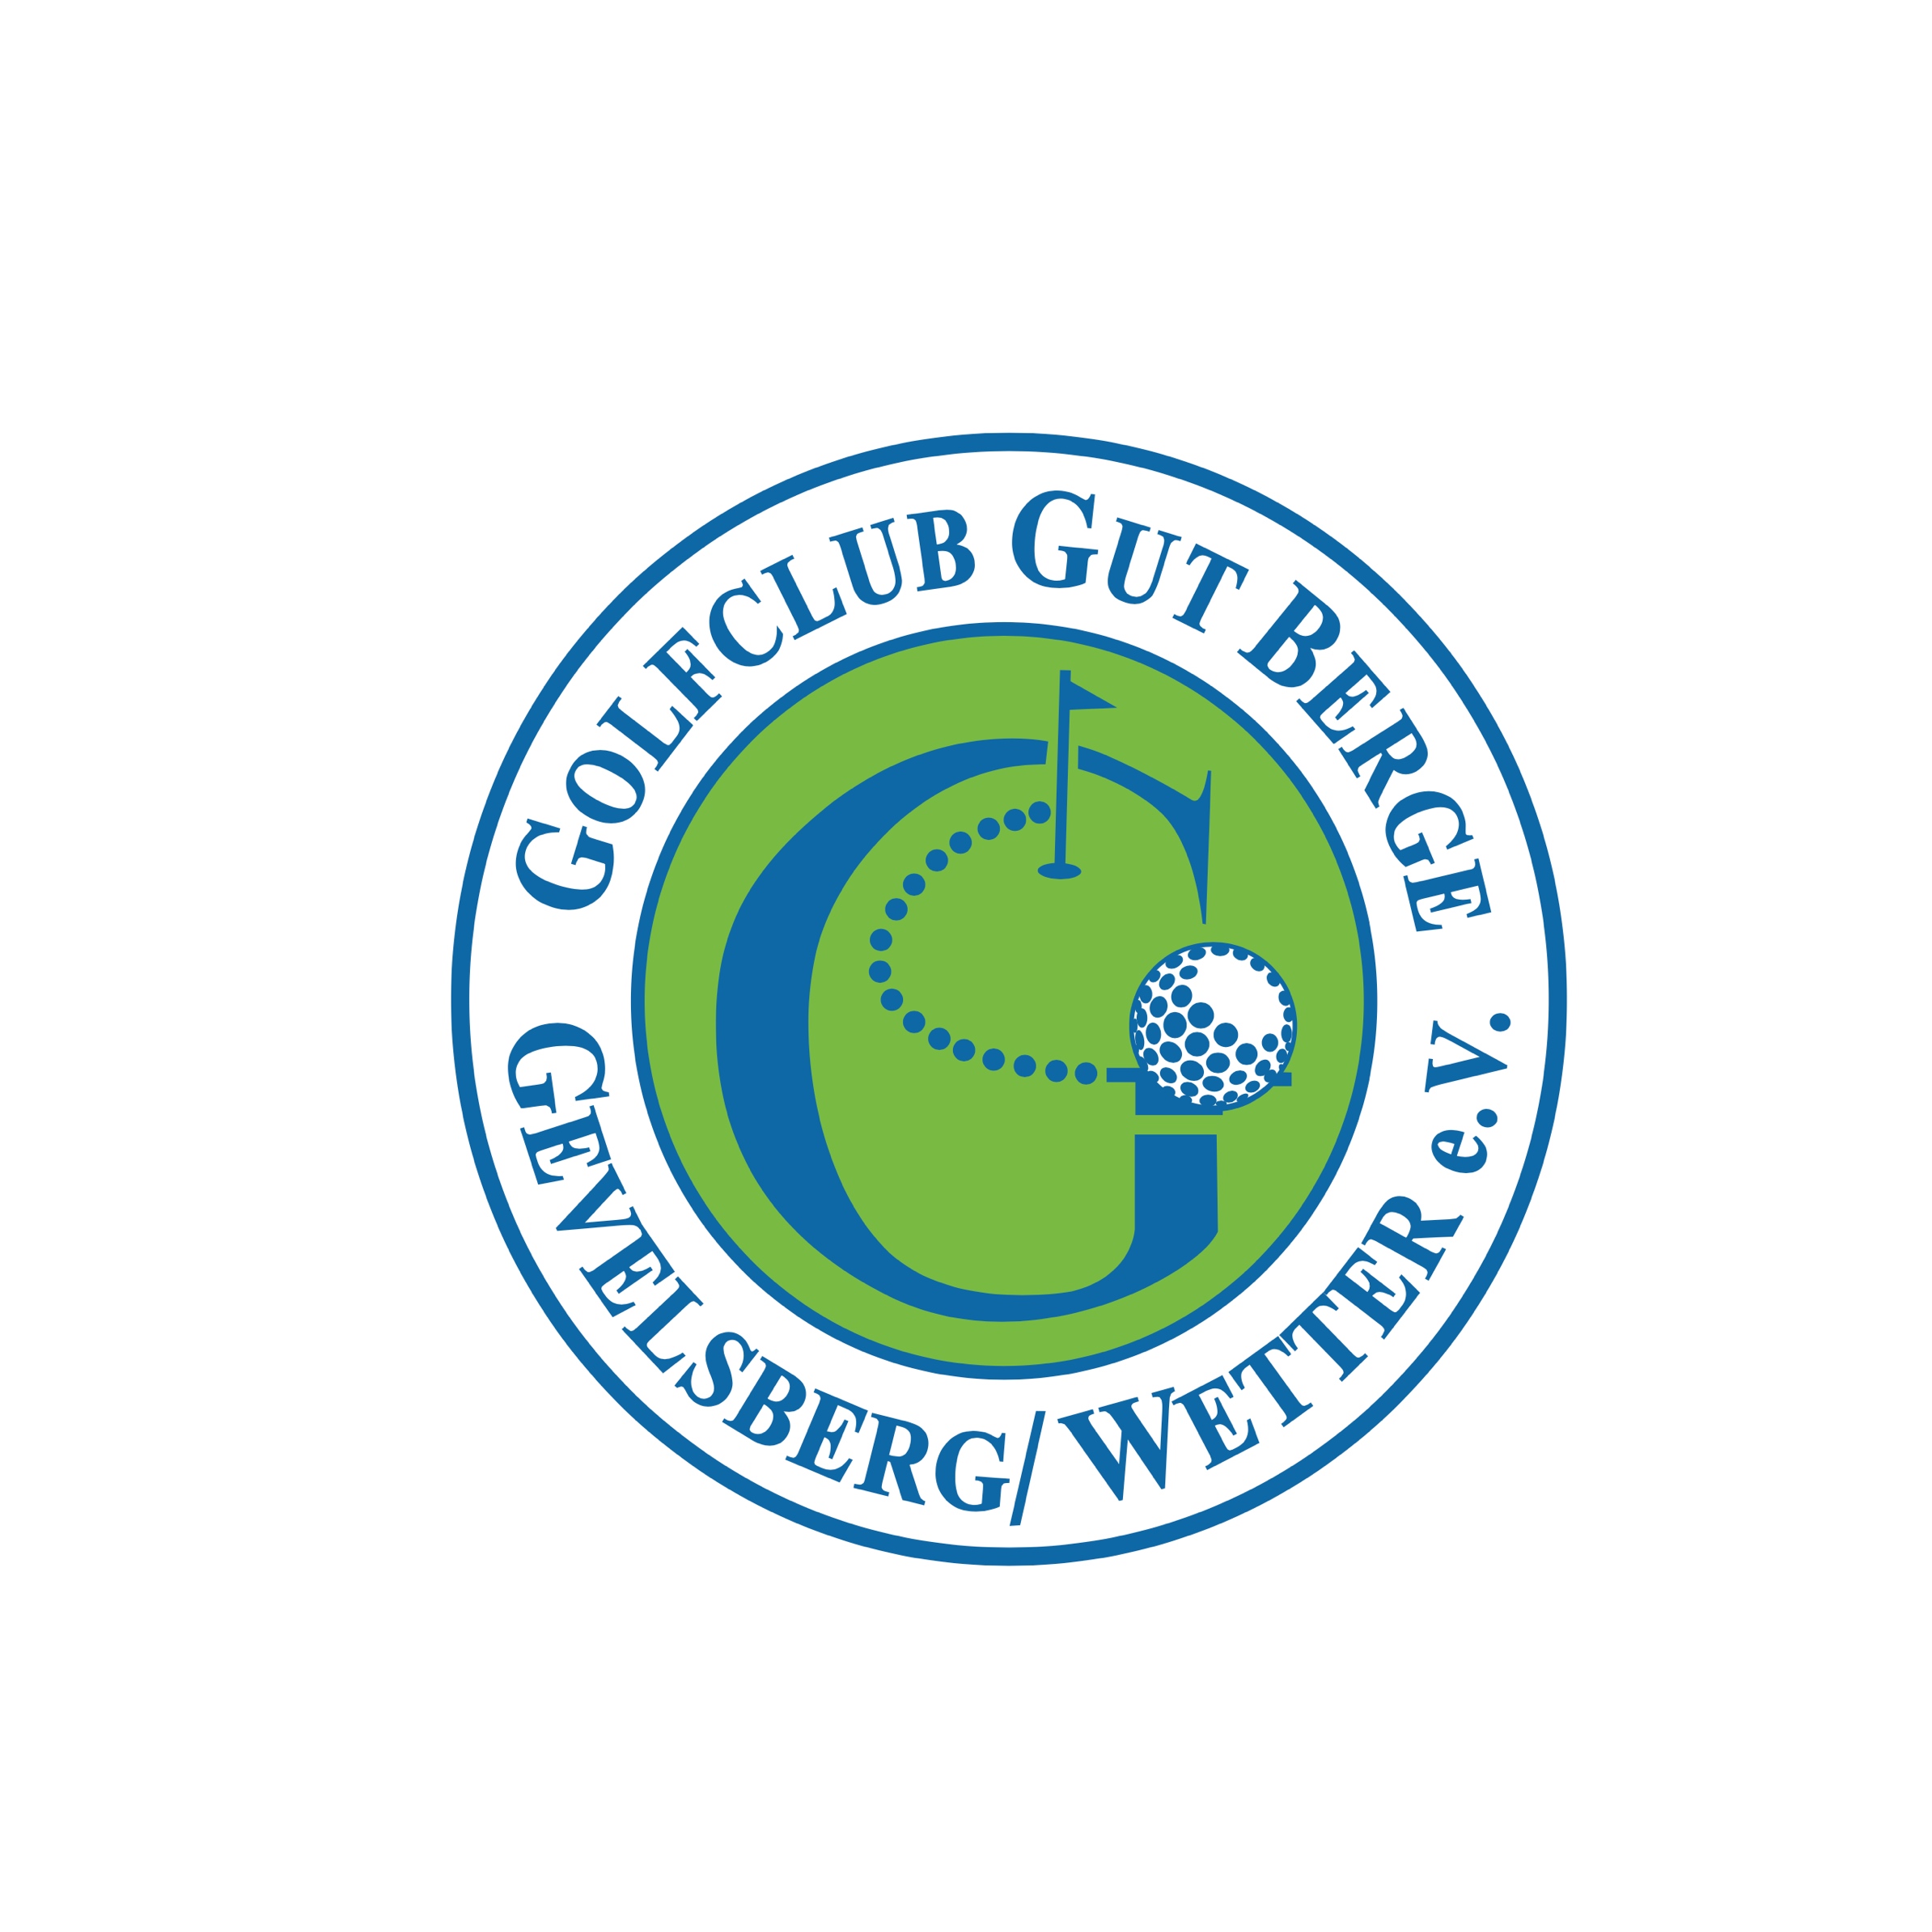 28. Gut Berge (Golfclub Gut Berge Gevelsberg/Wetter e.V.)